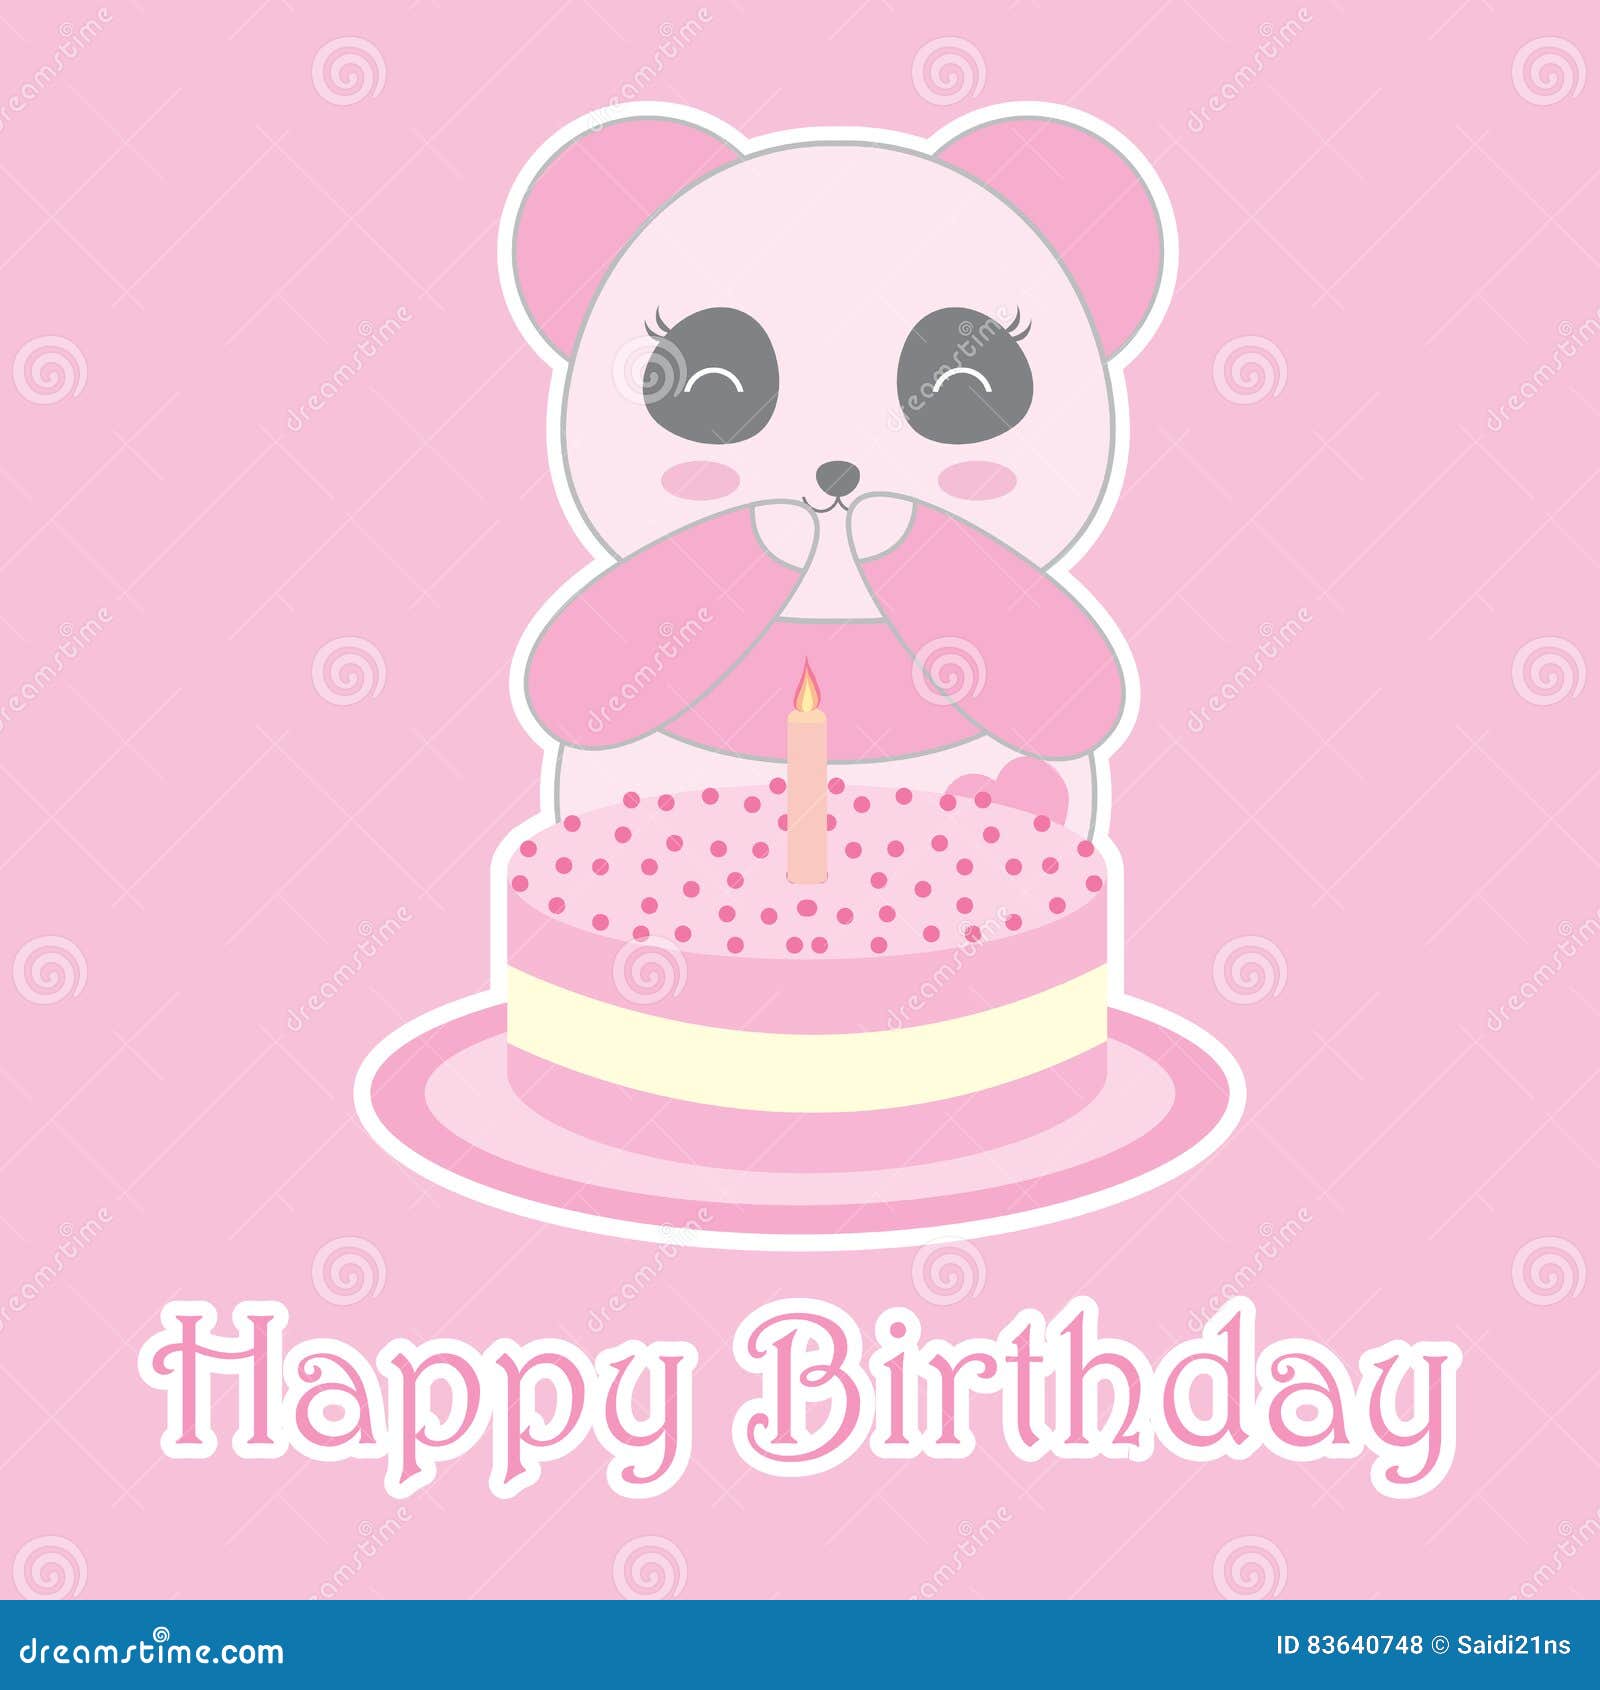 Panda Gift Cake | Adult Gift Cakes | The Cake Store